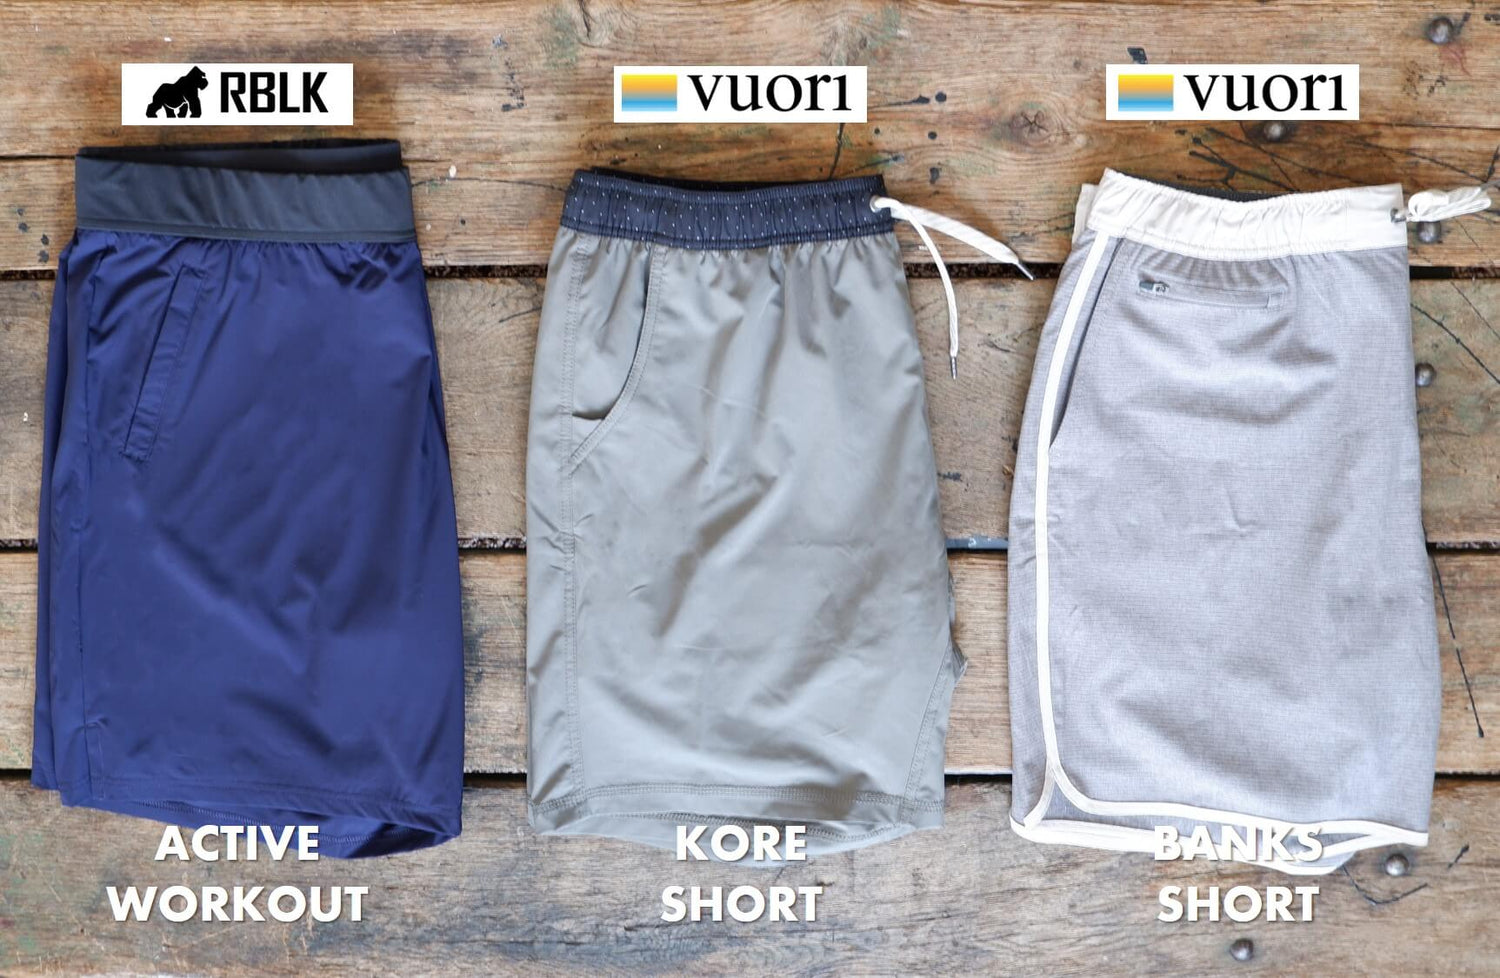 Comparing The Best Vuori Shorts: Kore Short vs Bank Short, An In-Depth Reviewed Plus A Better Alternative